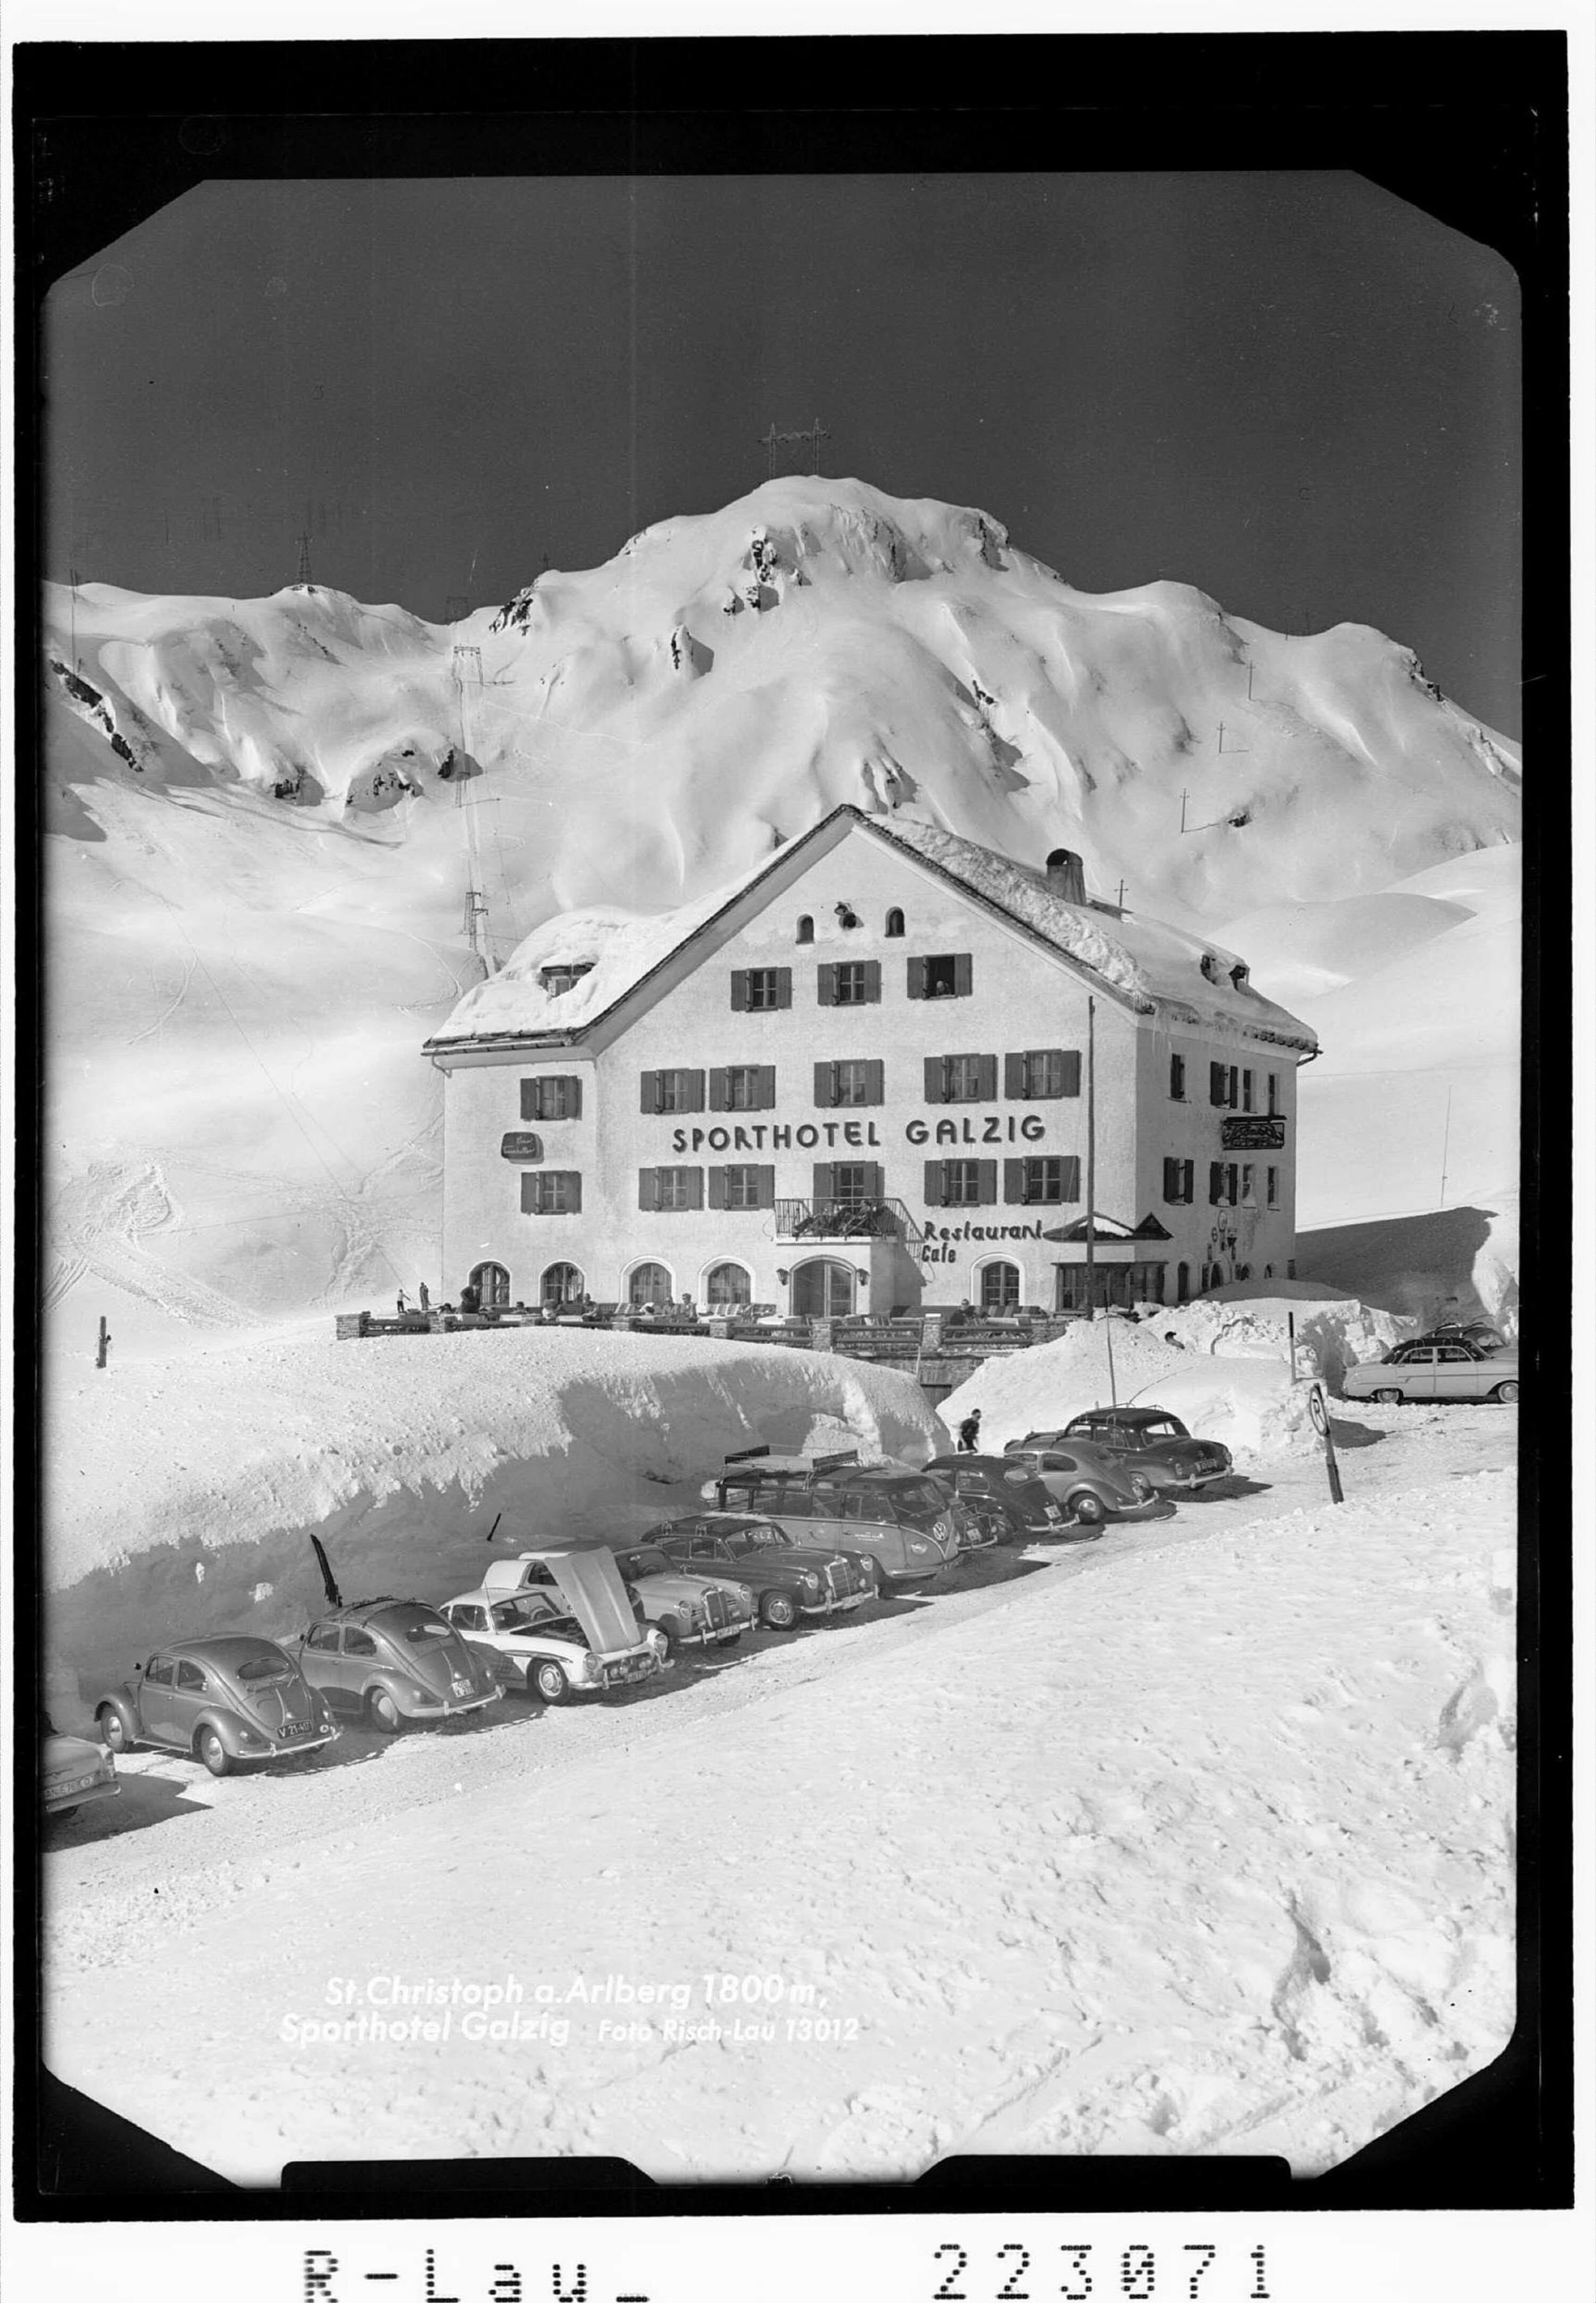 St.Christoph am Arlberg 1800 m / Sporthotel Galzig></div>


    <hr>
    <div class=